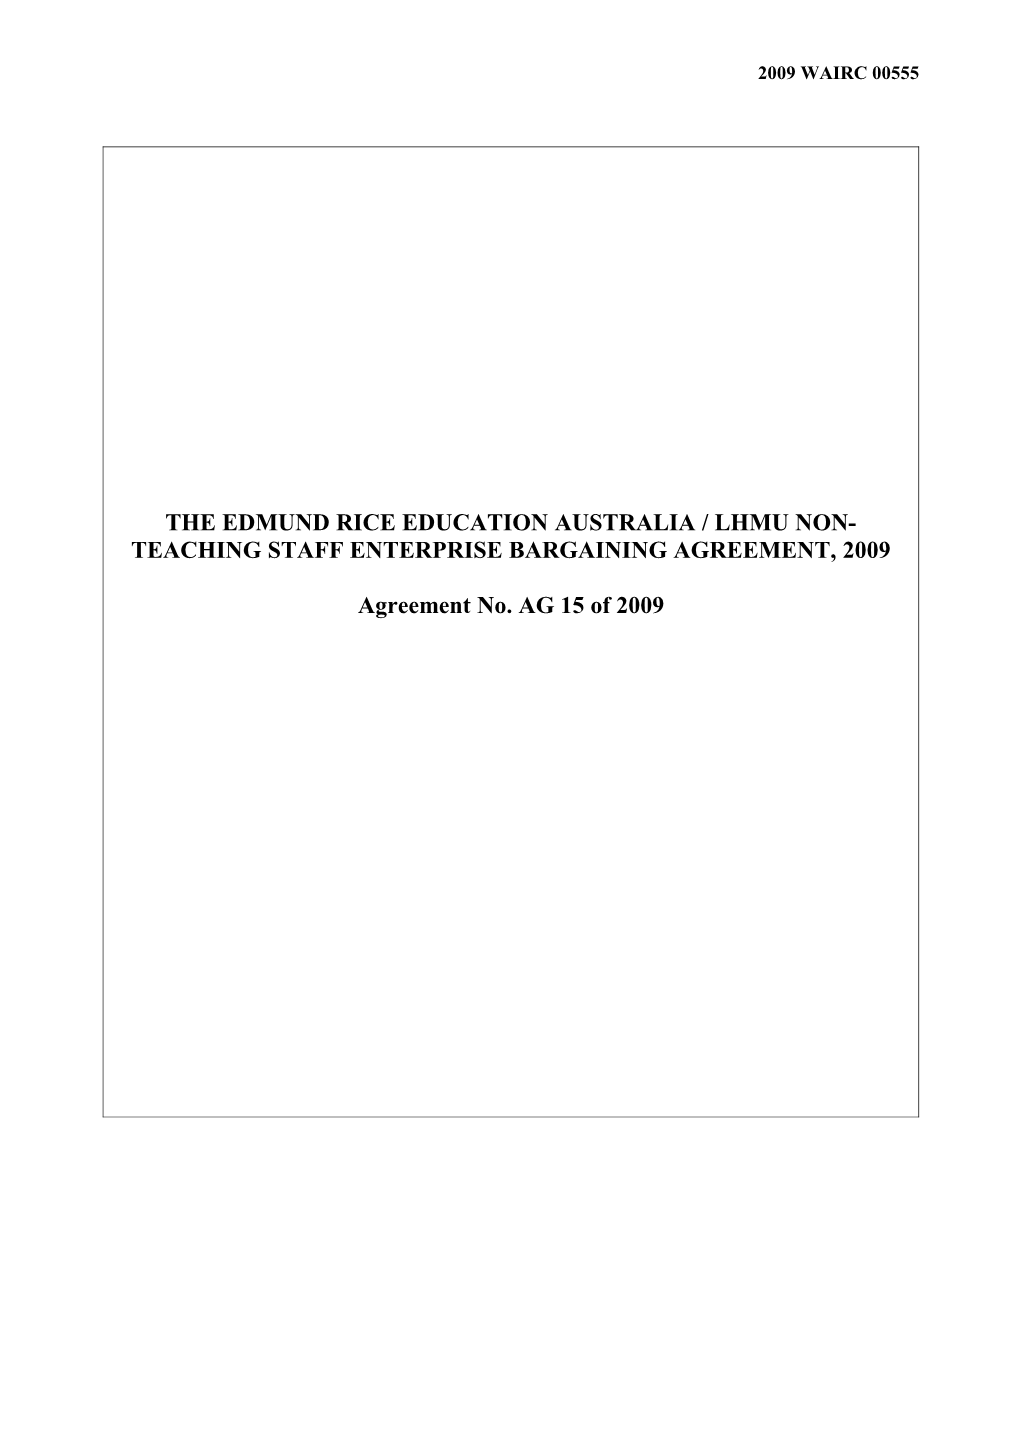 The Edmund Rice Education Australia / LHMU Non - Teaching Staff Enterprise Bargaining Agreement